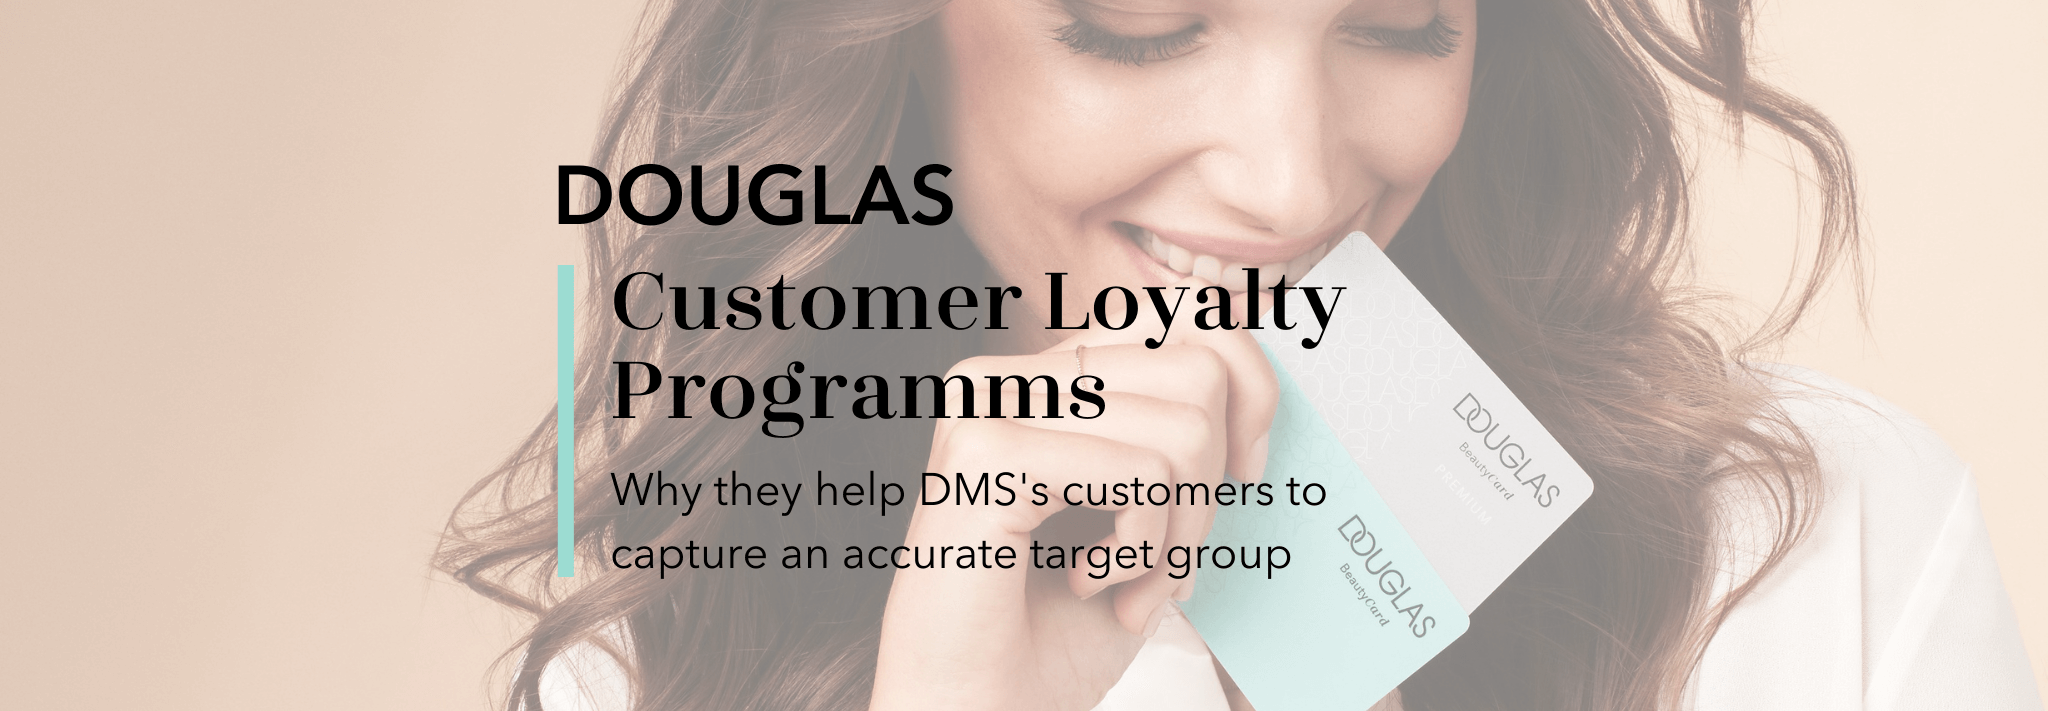 Titelbild mit Schriftzug - Douglas Customer Loyalty Programms